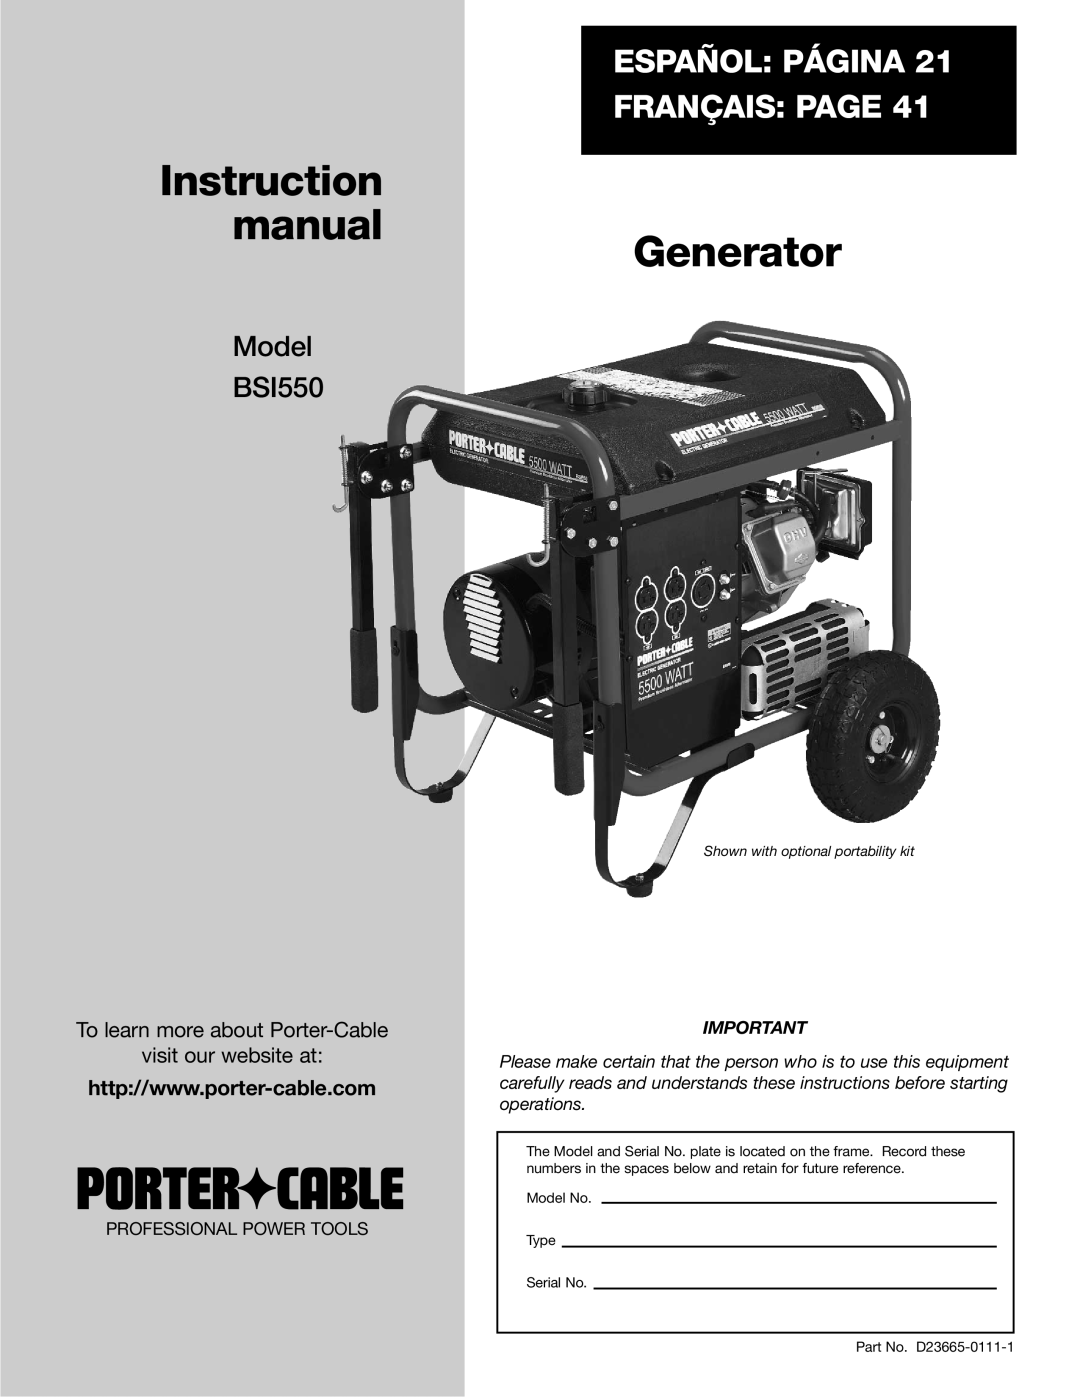 Porter-Cable instruction manual Instruction manual, Generator, Español Página Français Page, Model BSI550 